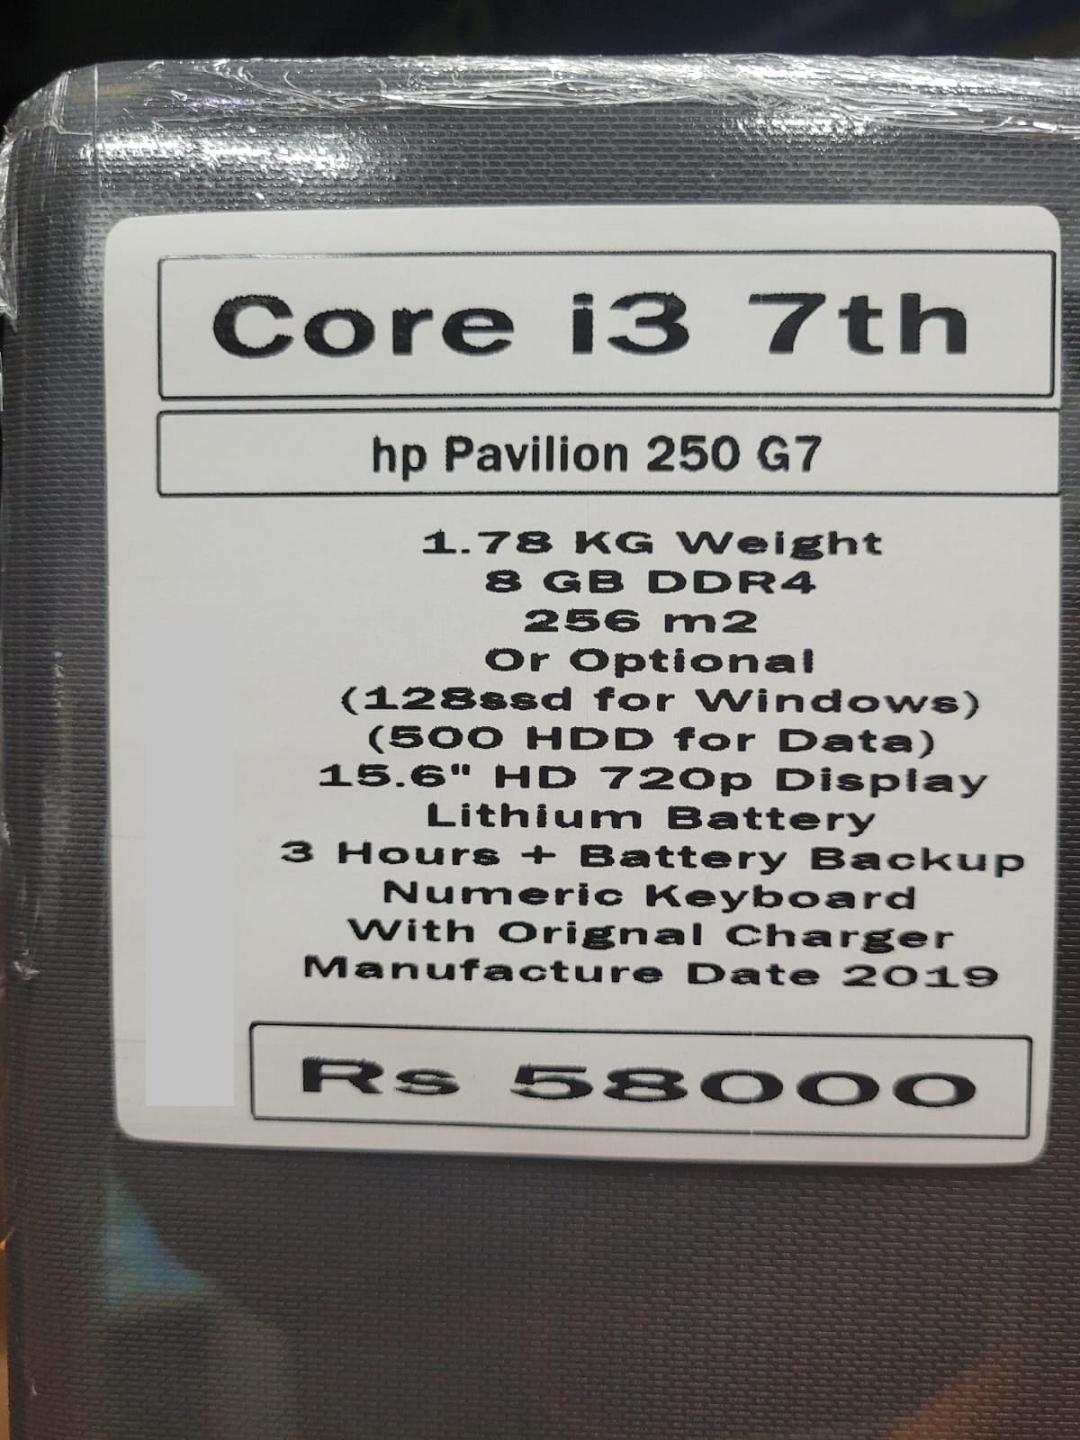 Laptop hp Pavillion 250 g7 core i3 7th generation price in pakistan